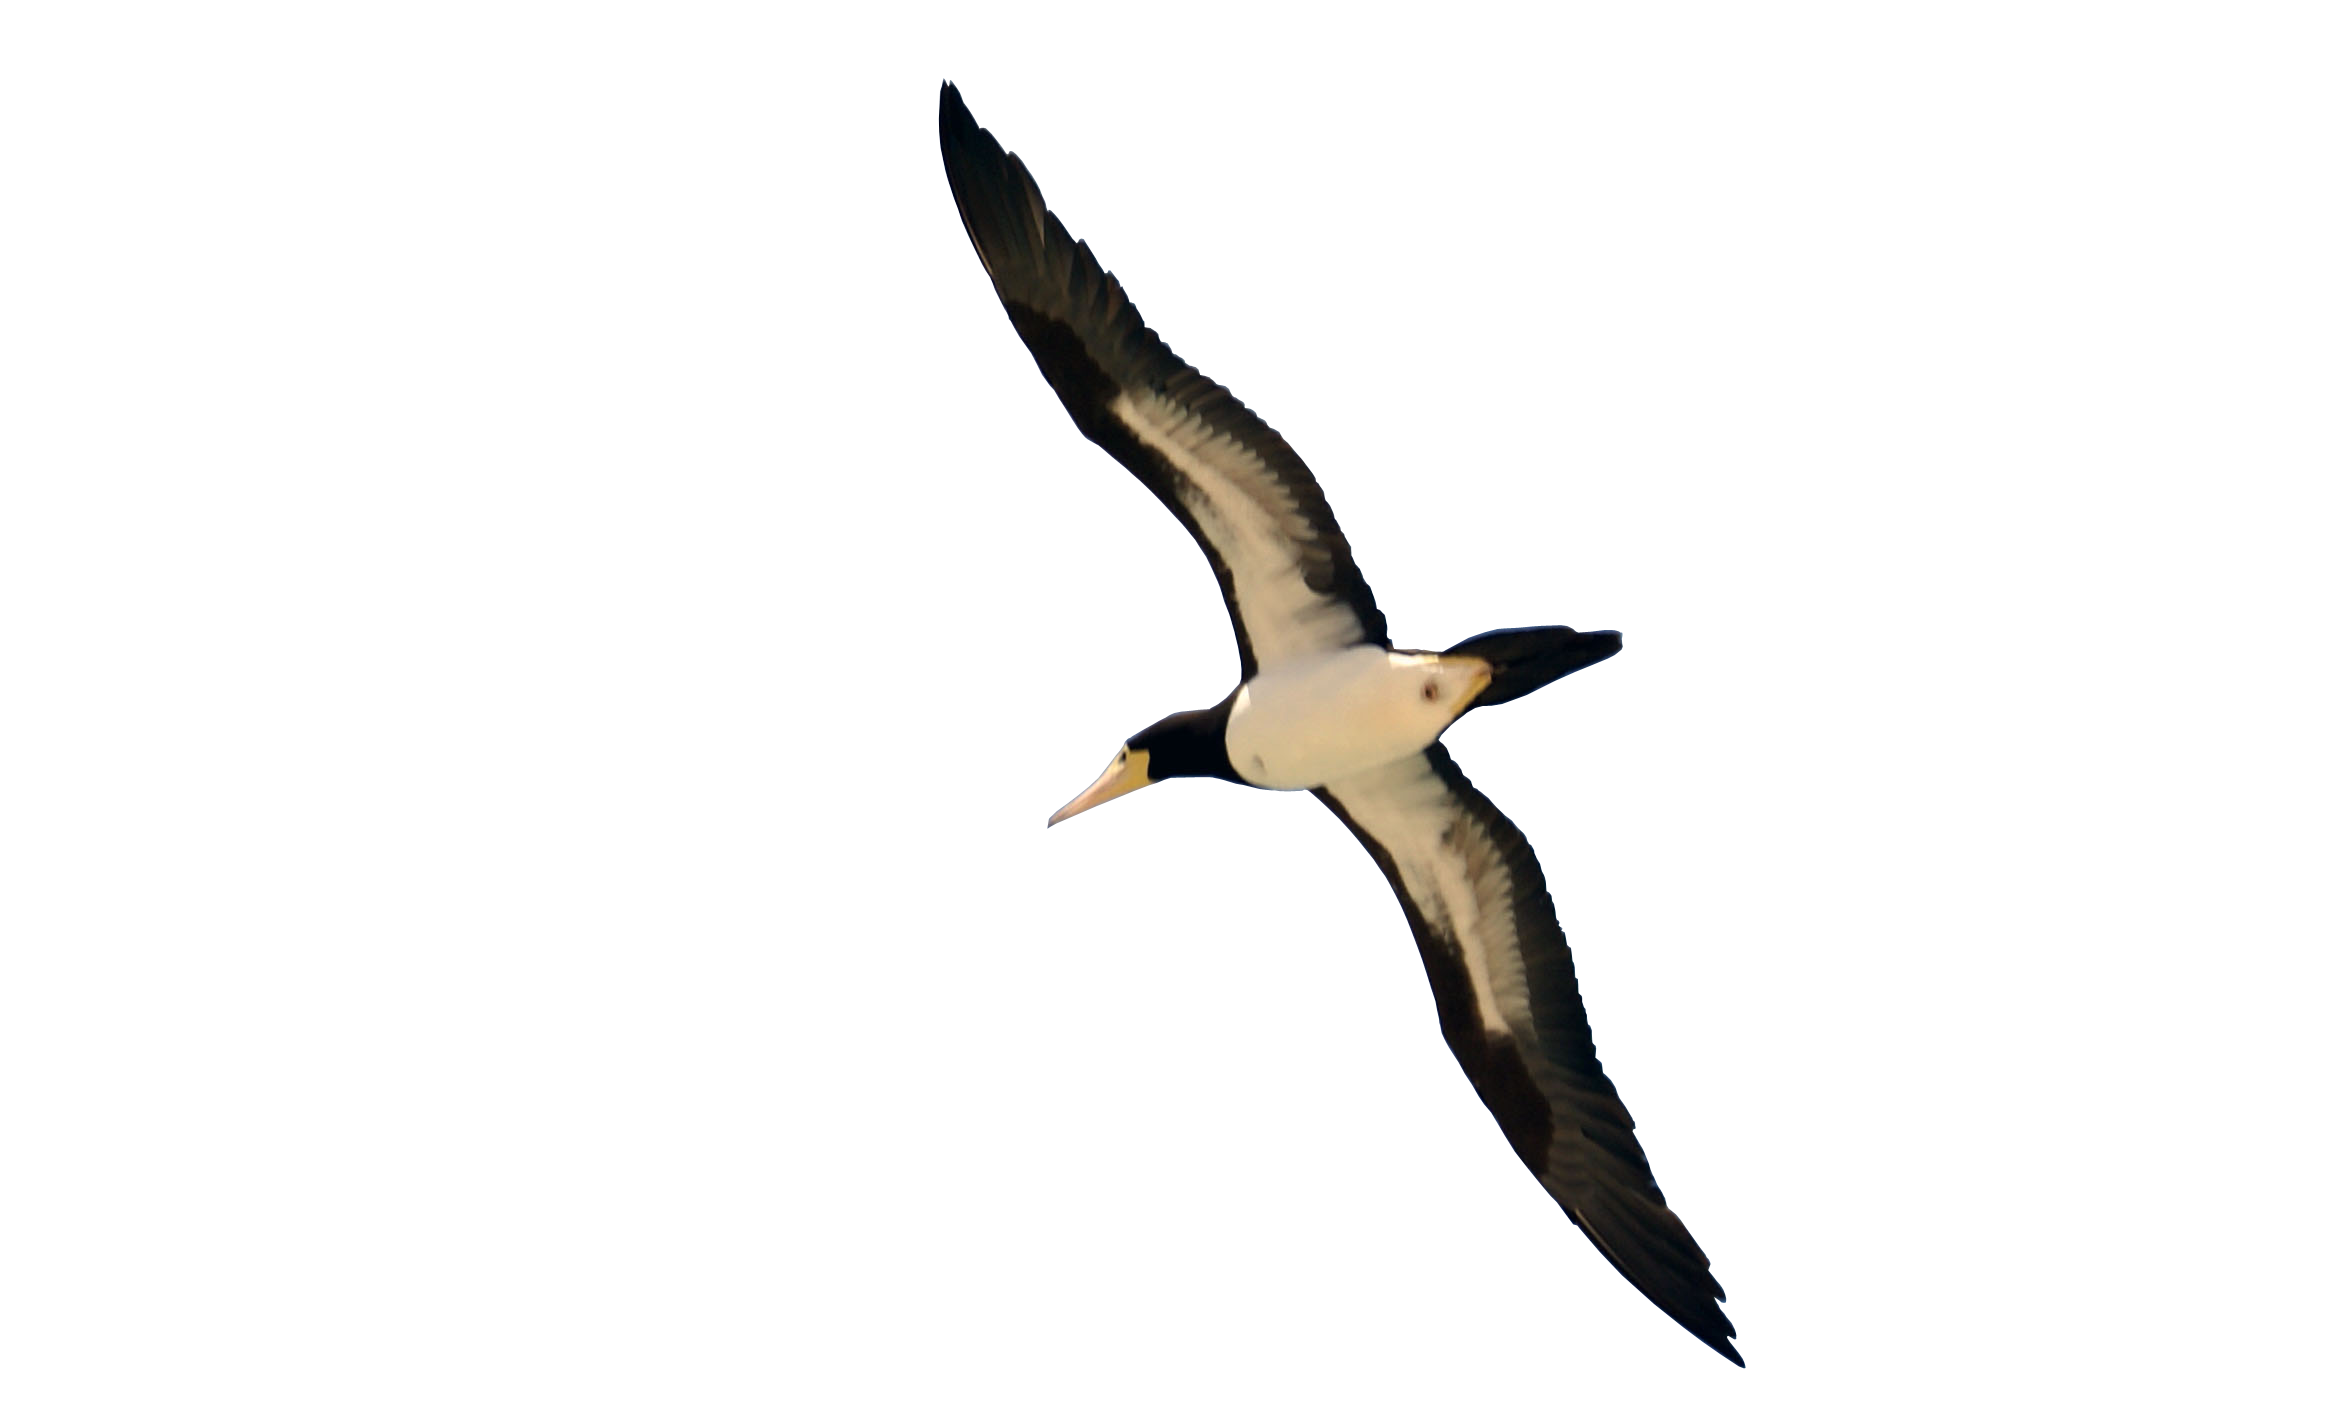 Single Flying Bird PNG Free Image